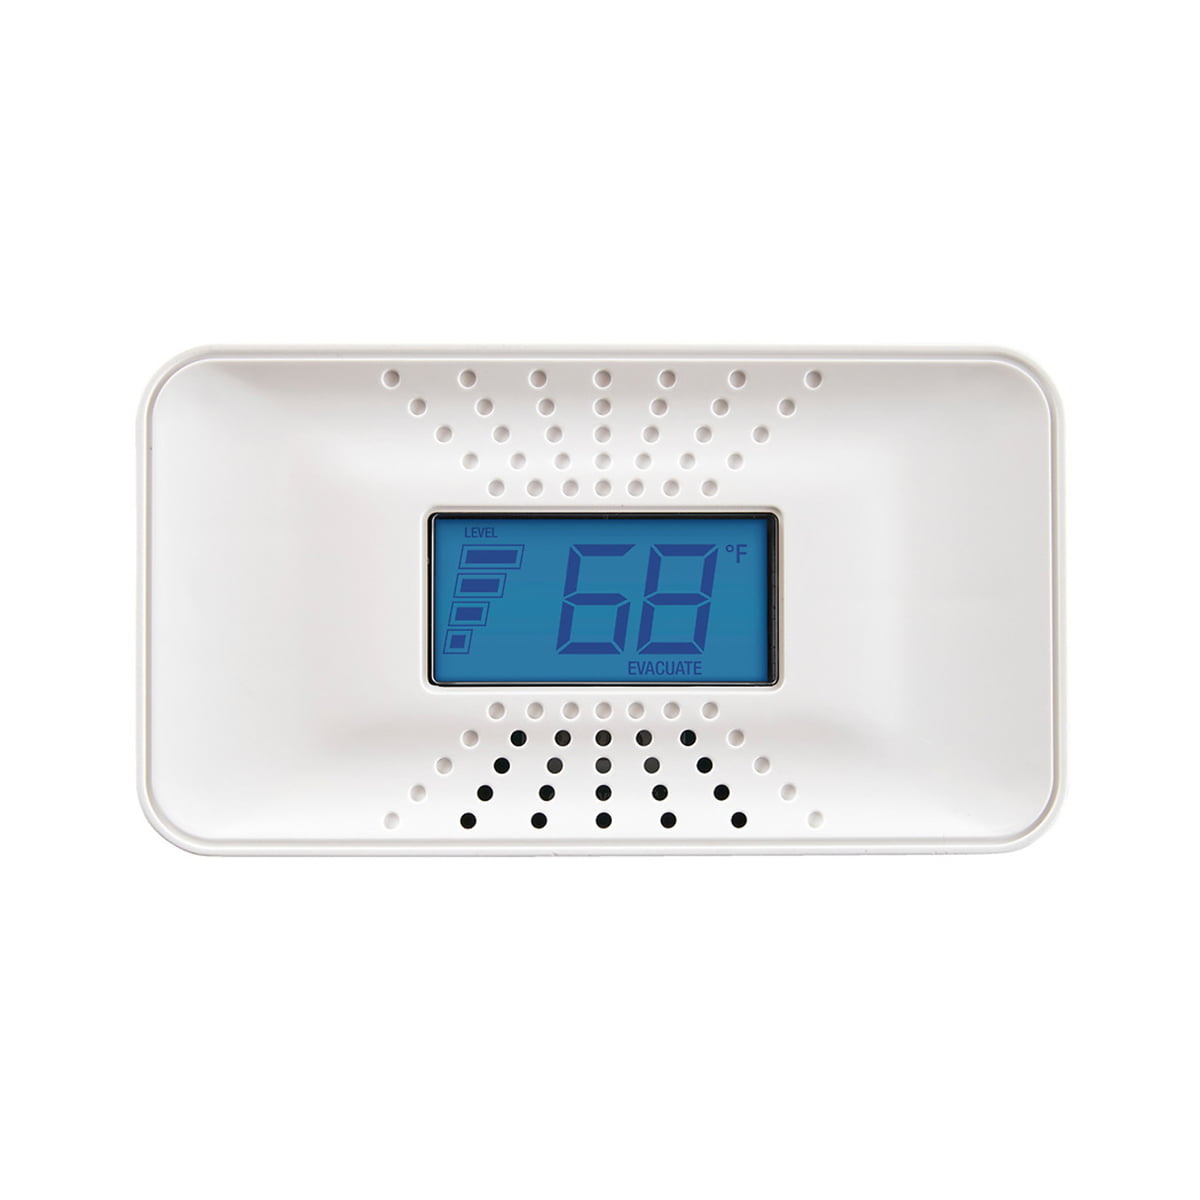 2 × LCD Combination CO Carbon Monoxide Gas Detector Alarm Security Tester Alert 